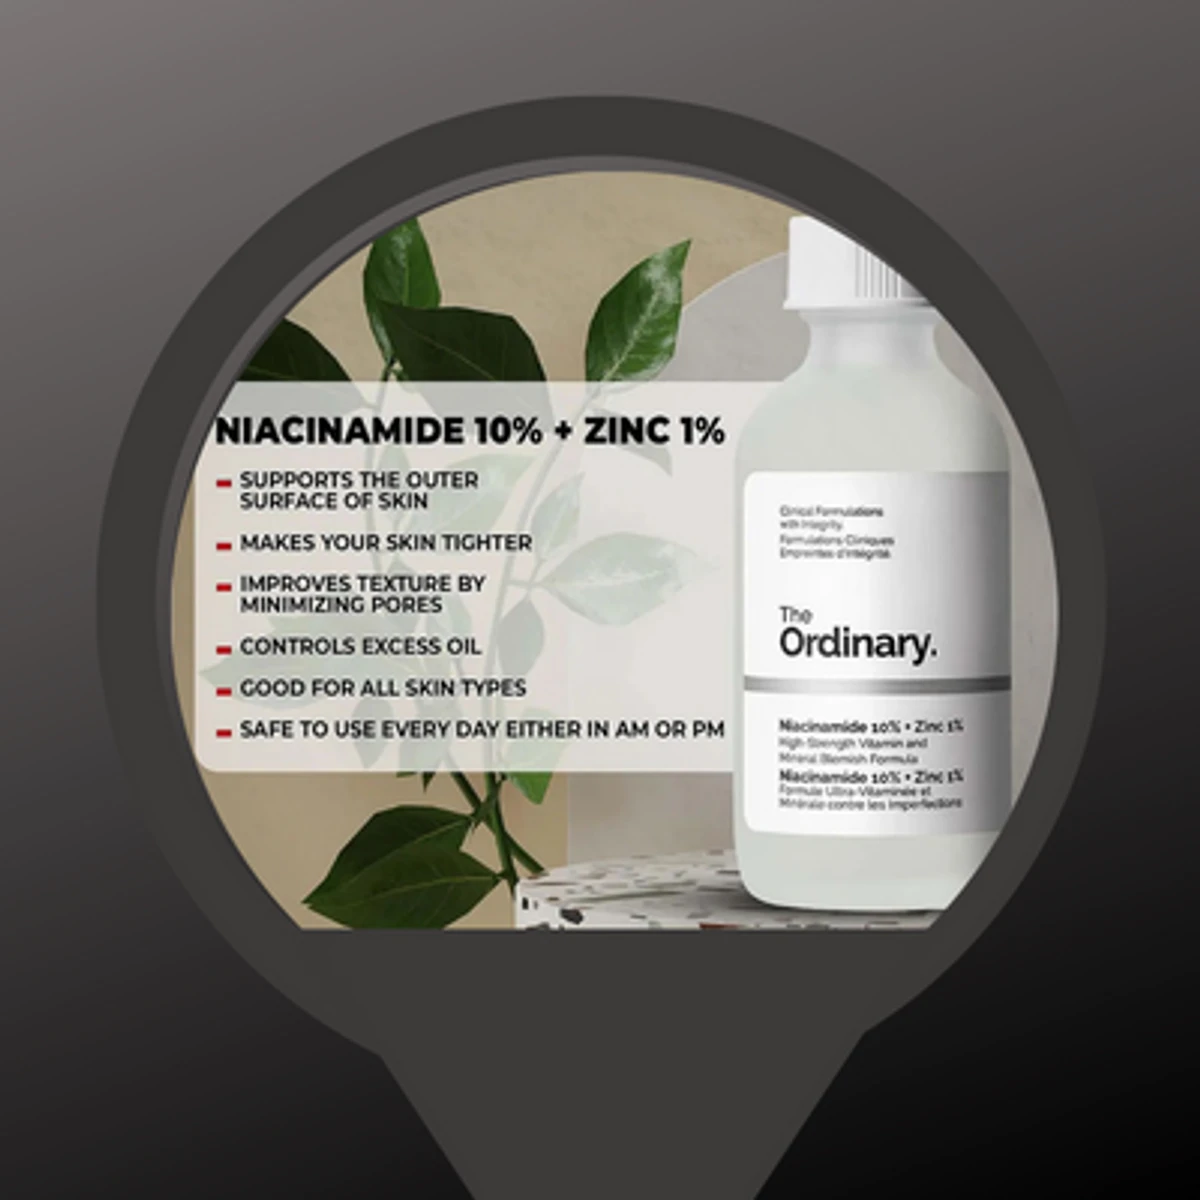 The ordinary Niacinamide 10% + Zinc 1%